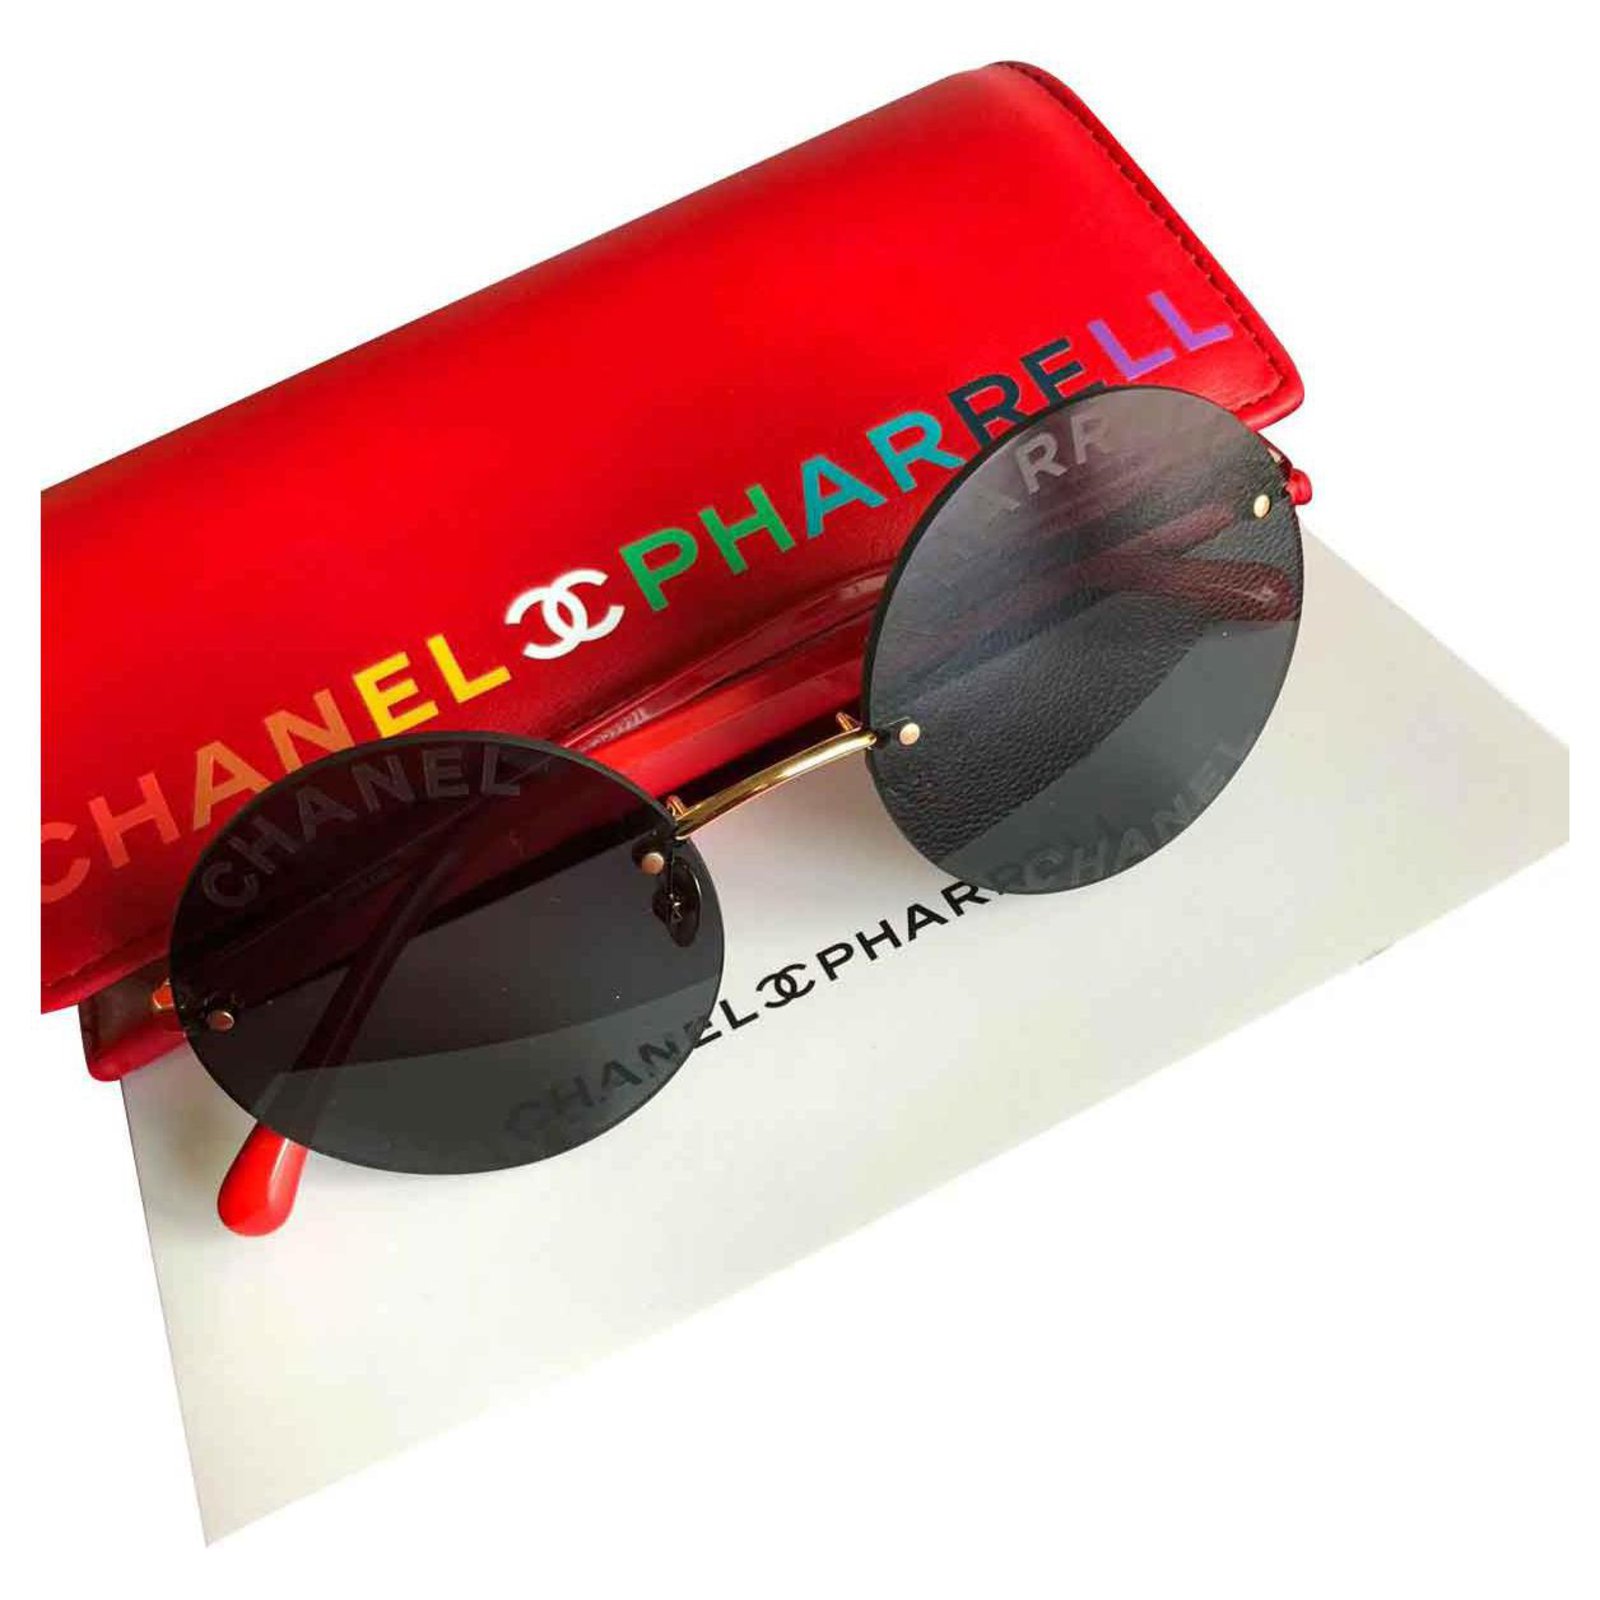 Chanel Pharrell